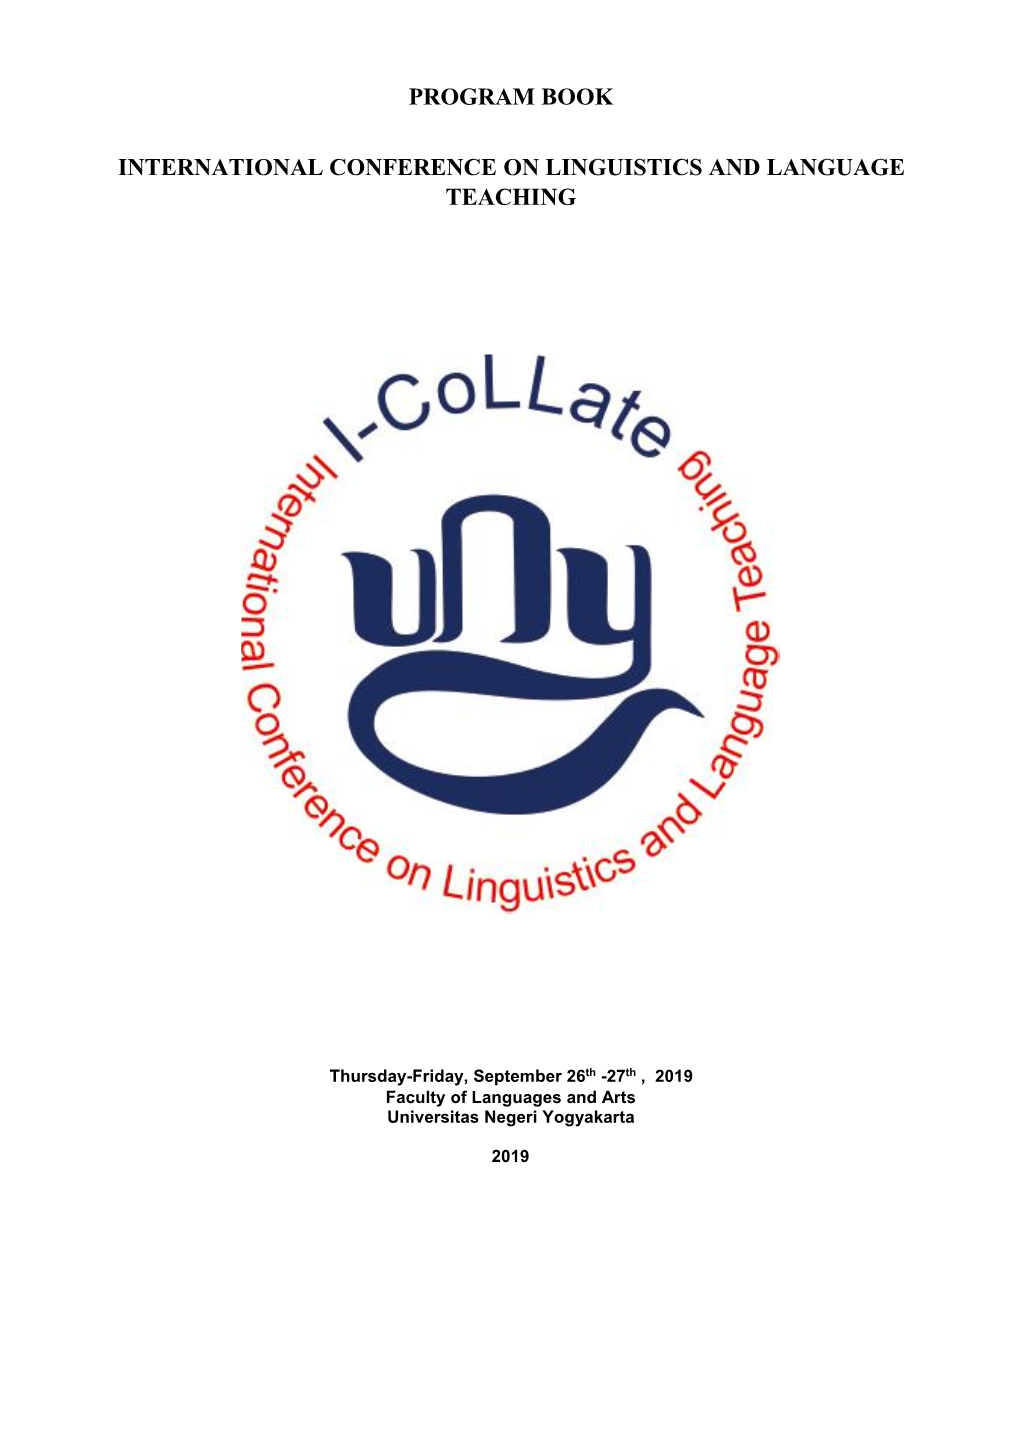 Program Book International Conference on Linguistics and Language Teaching